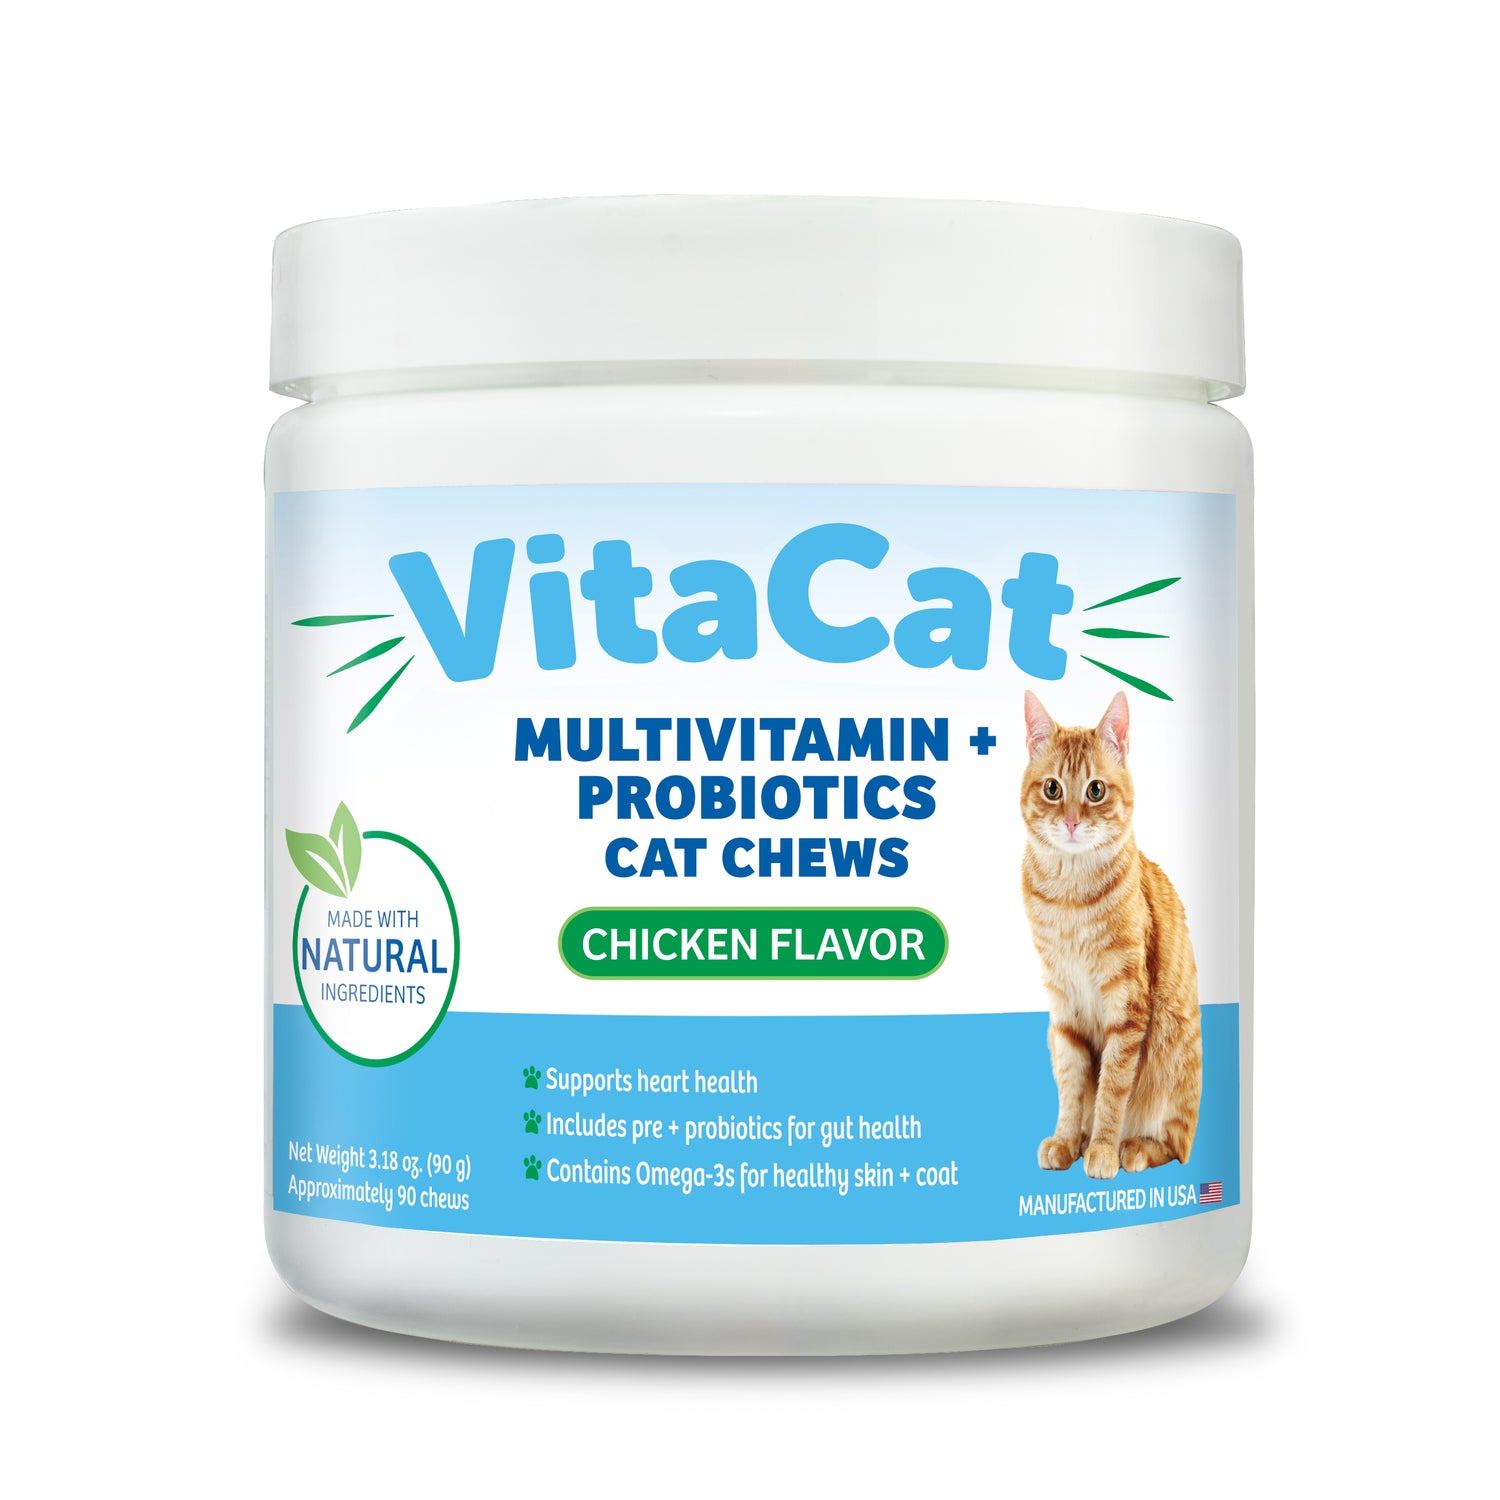 daily multivitamin & probiotics cat chews